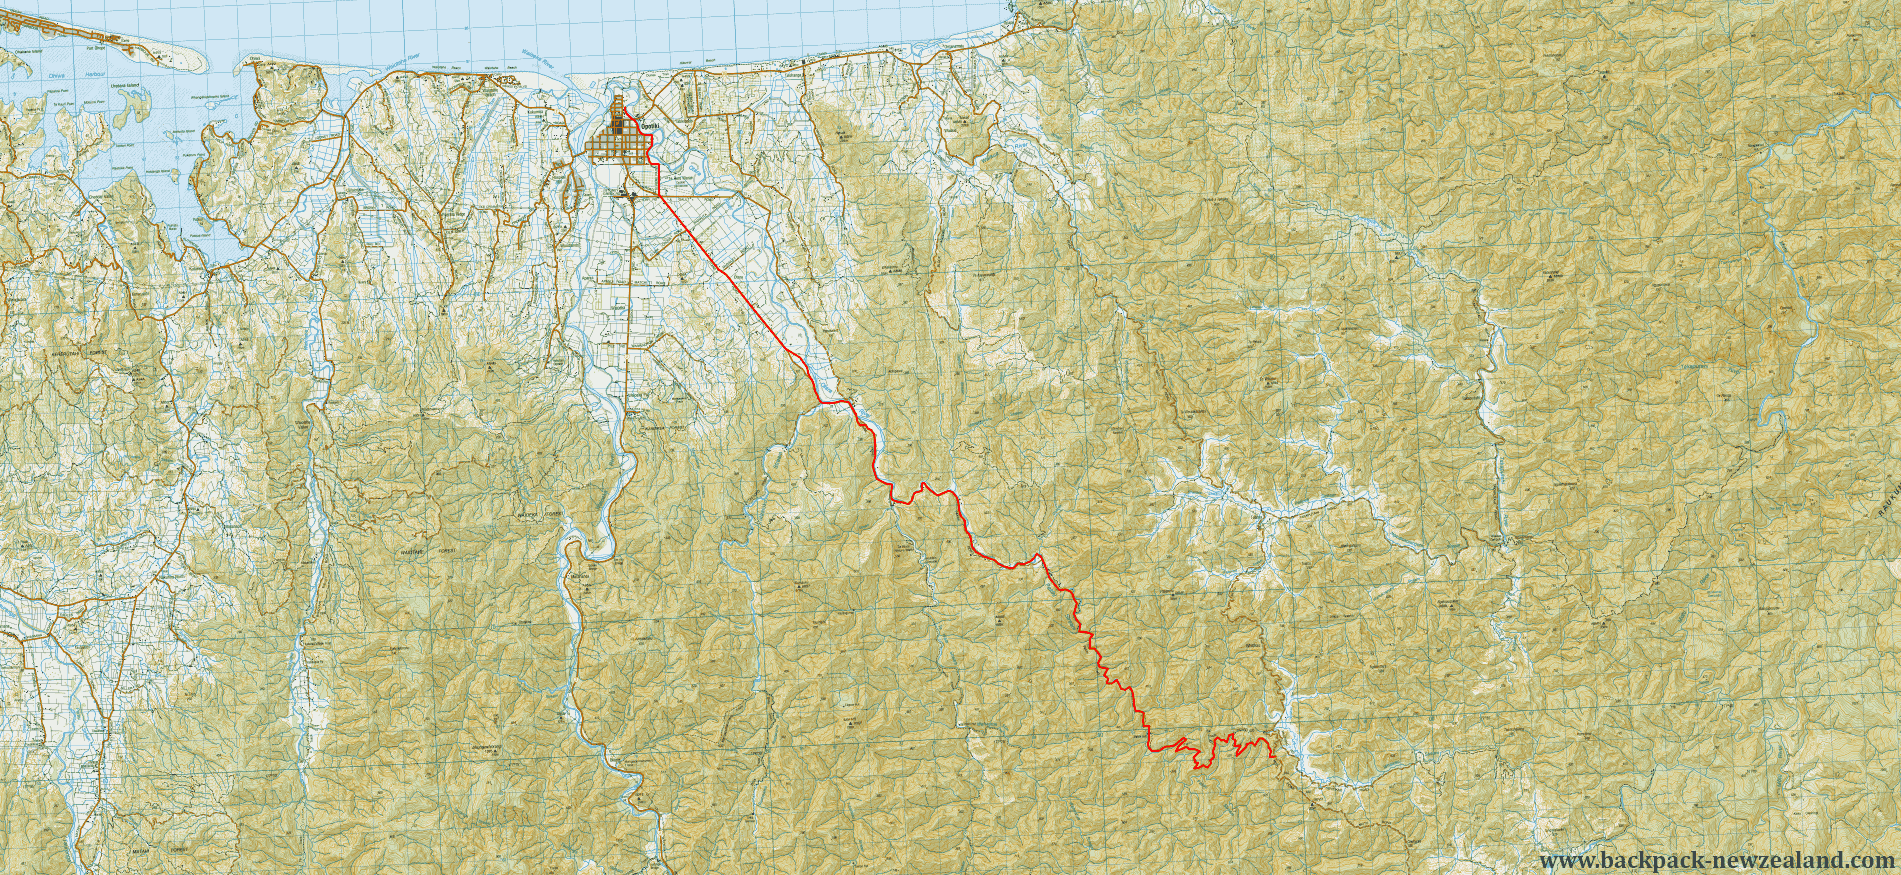 Pakihi Track Map - New Zealand Tracks